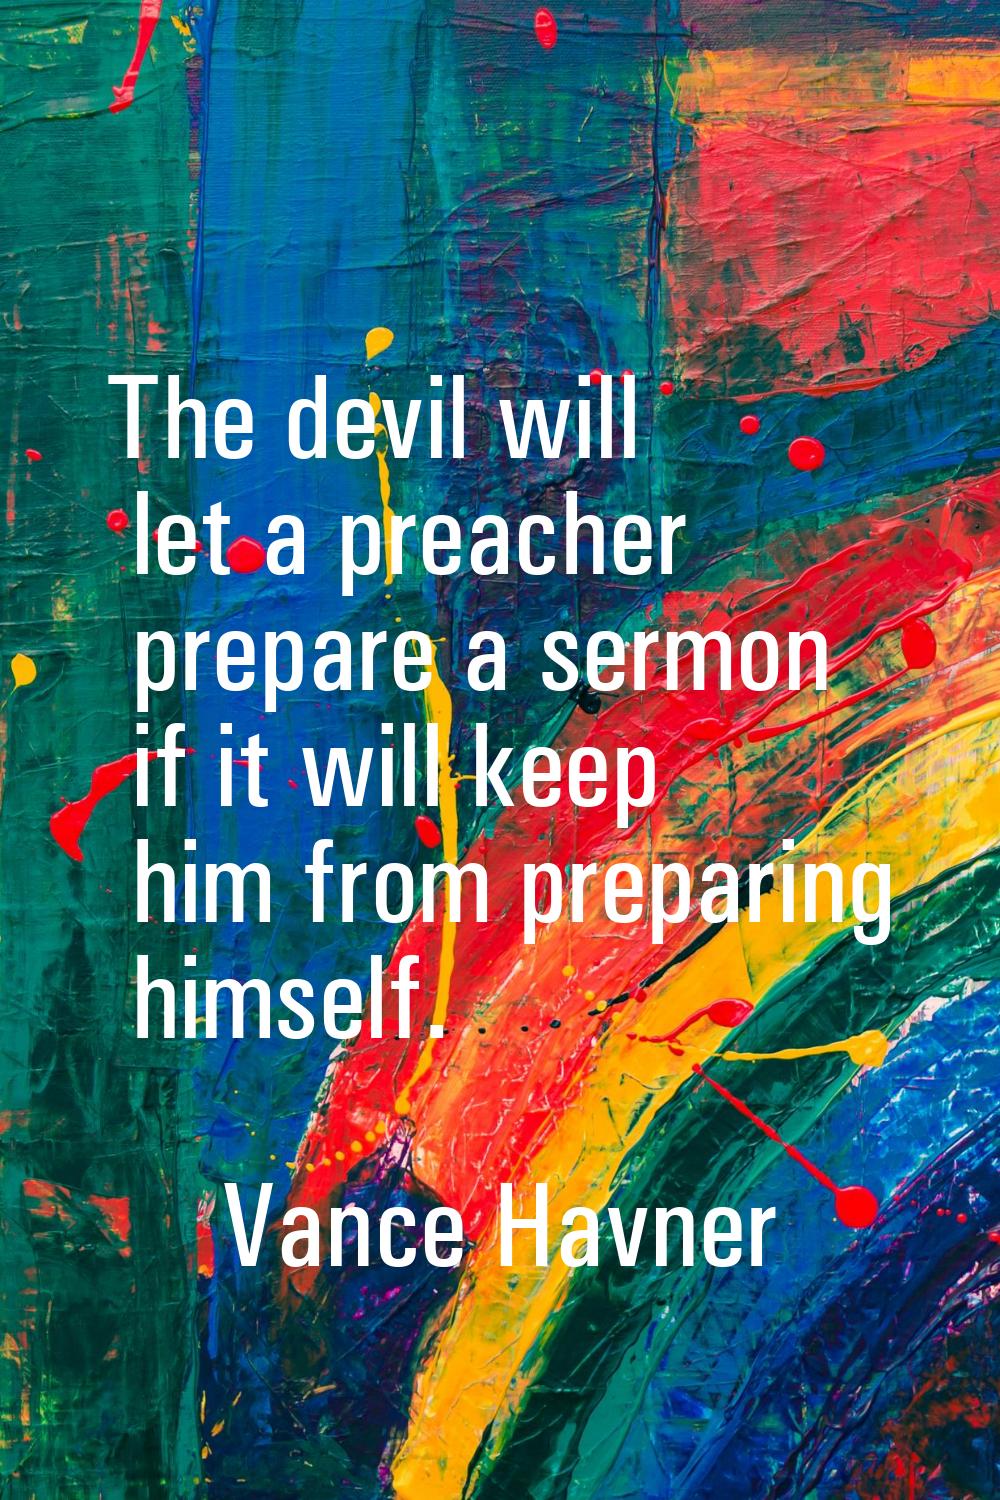 The devil will let a preacher prepare a sermon if it will keep him from preparing himself.